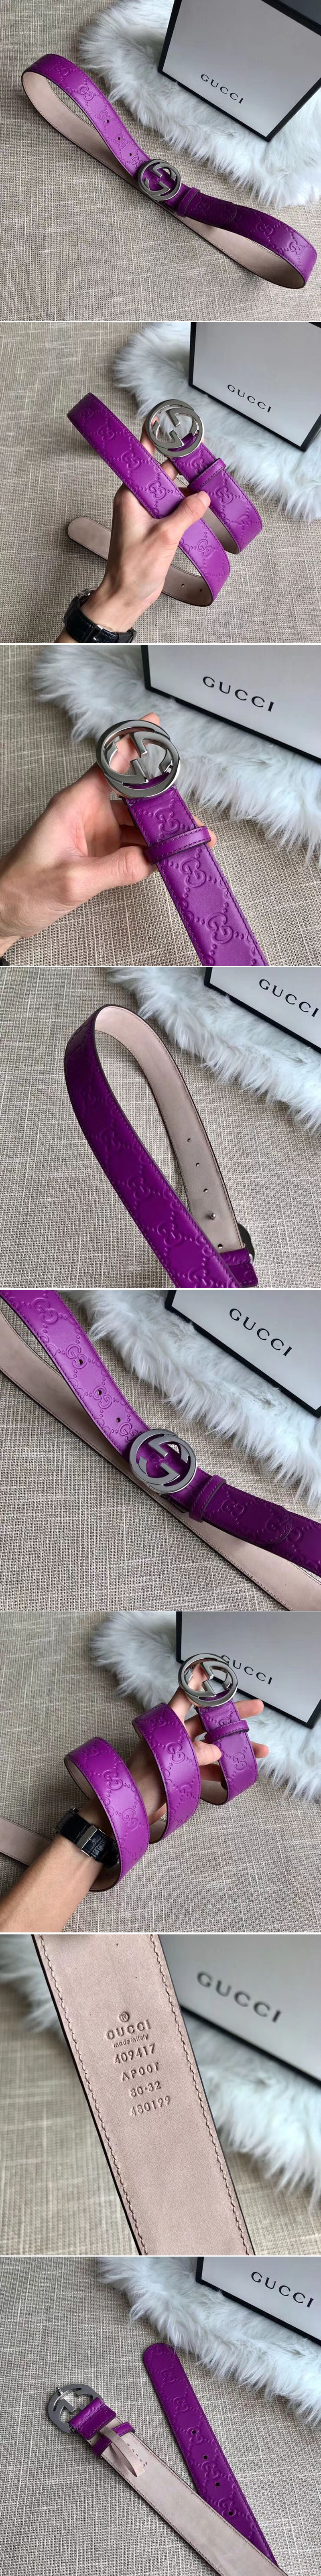 Replica Gucci 409417 35mm Signature leather belt Purple Leather Silver G buckle